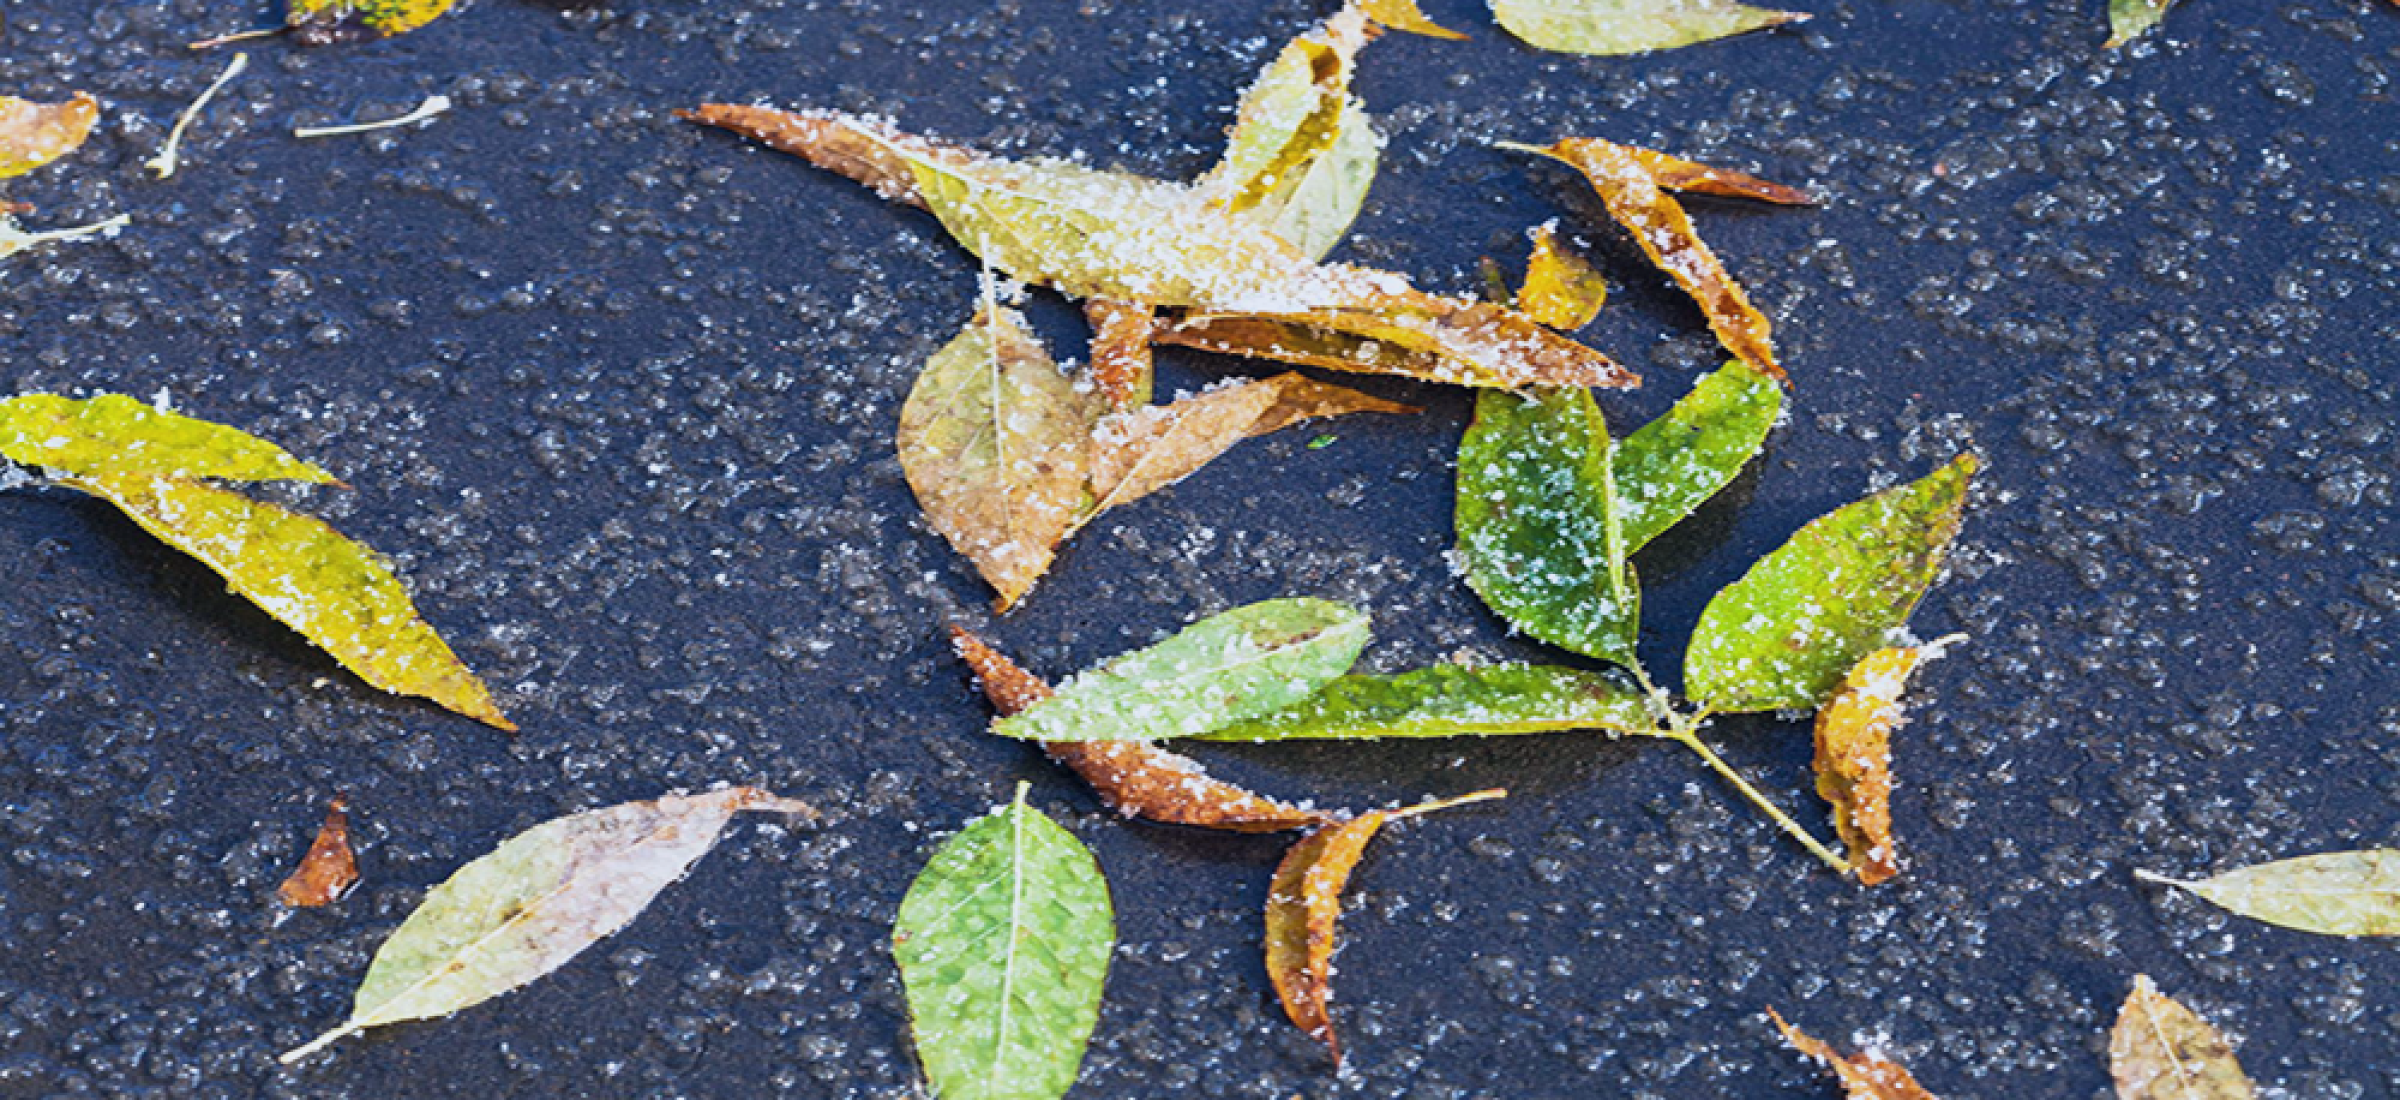 leaf-litter-melting-first-snow